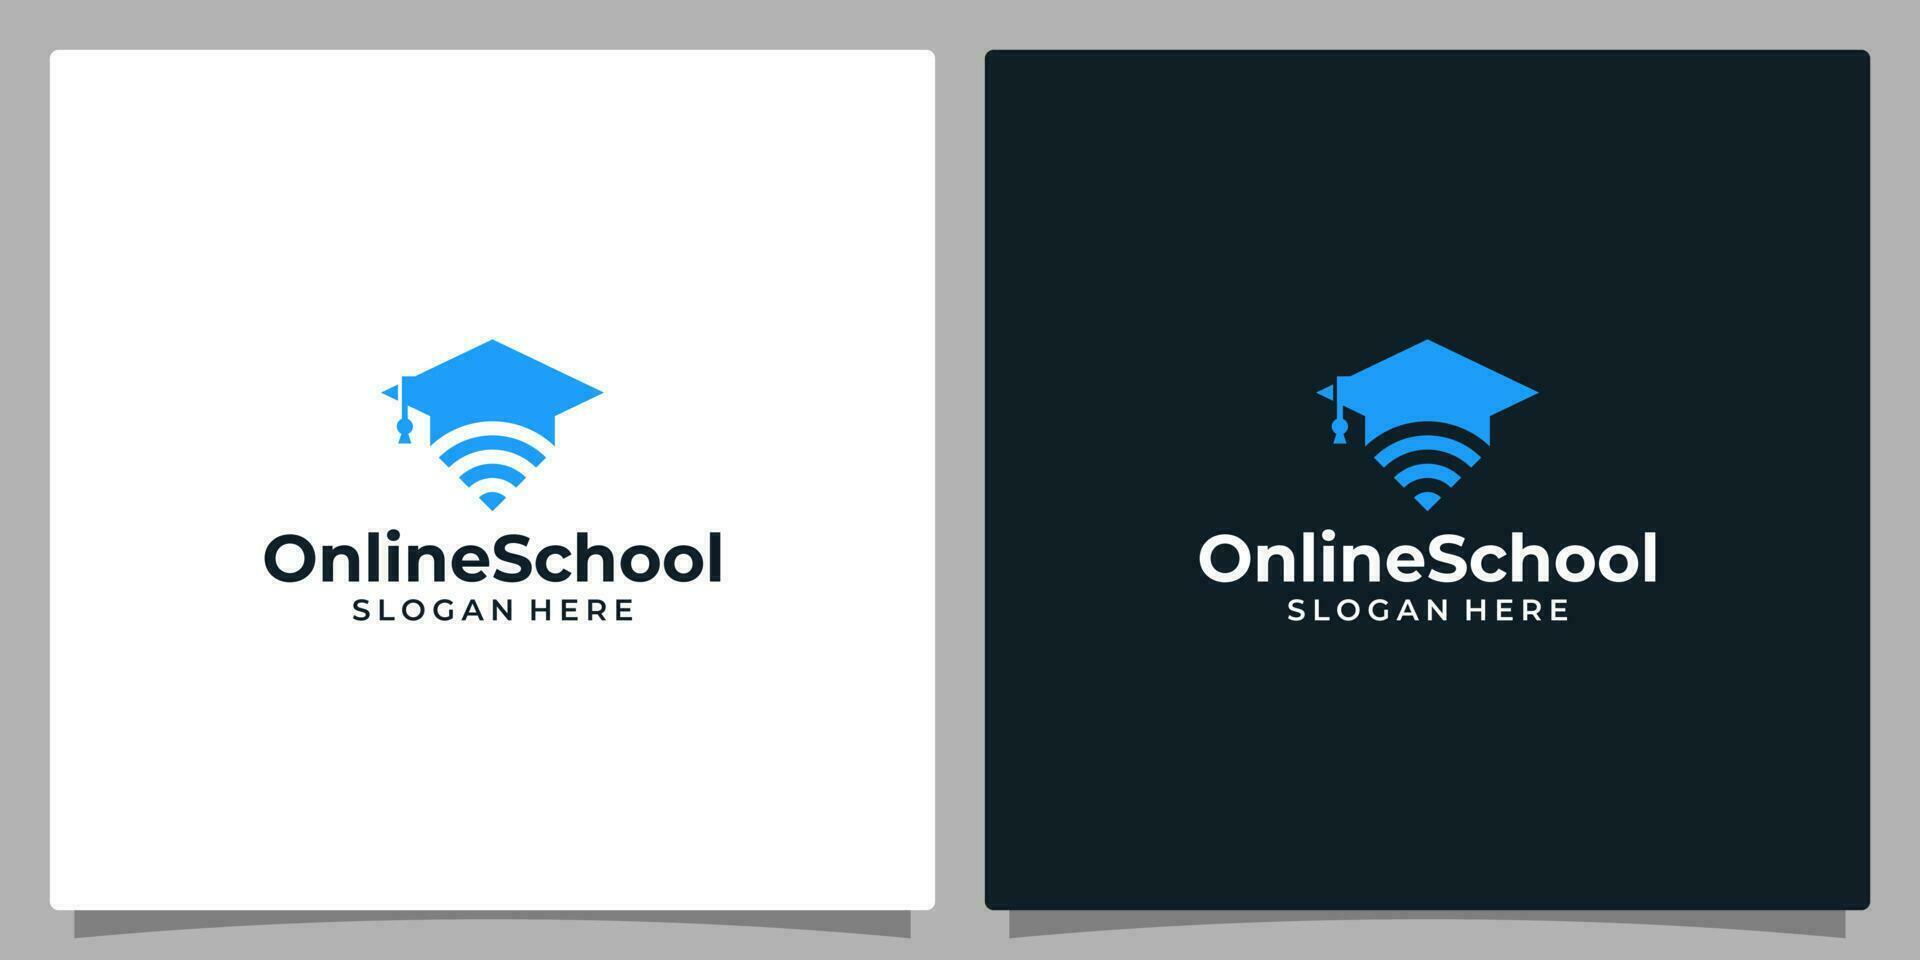 College, Graduate cap, Campus, Education logo design and Wireless device connection wifi icon symbol logo vector illustration graphic design.